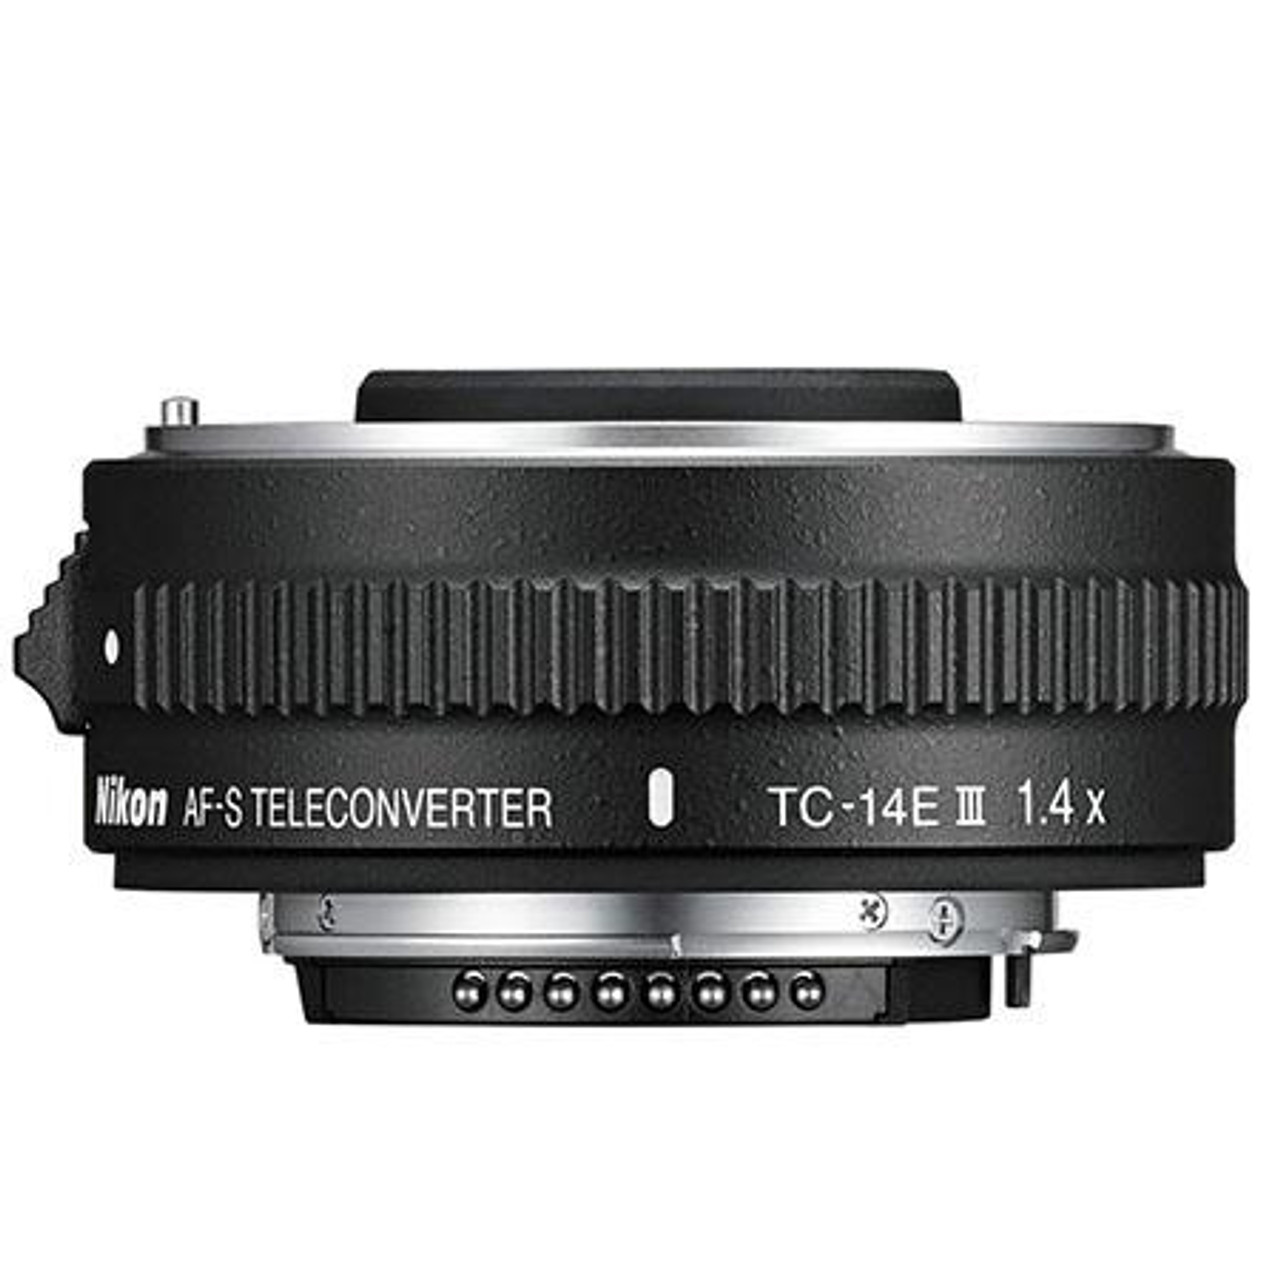 Nikon AF-S TELECONVERTER TC-14E III テレコン - カメラ